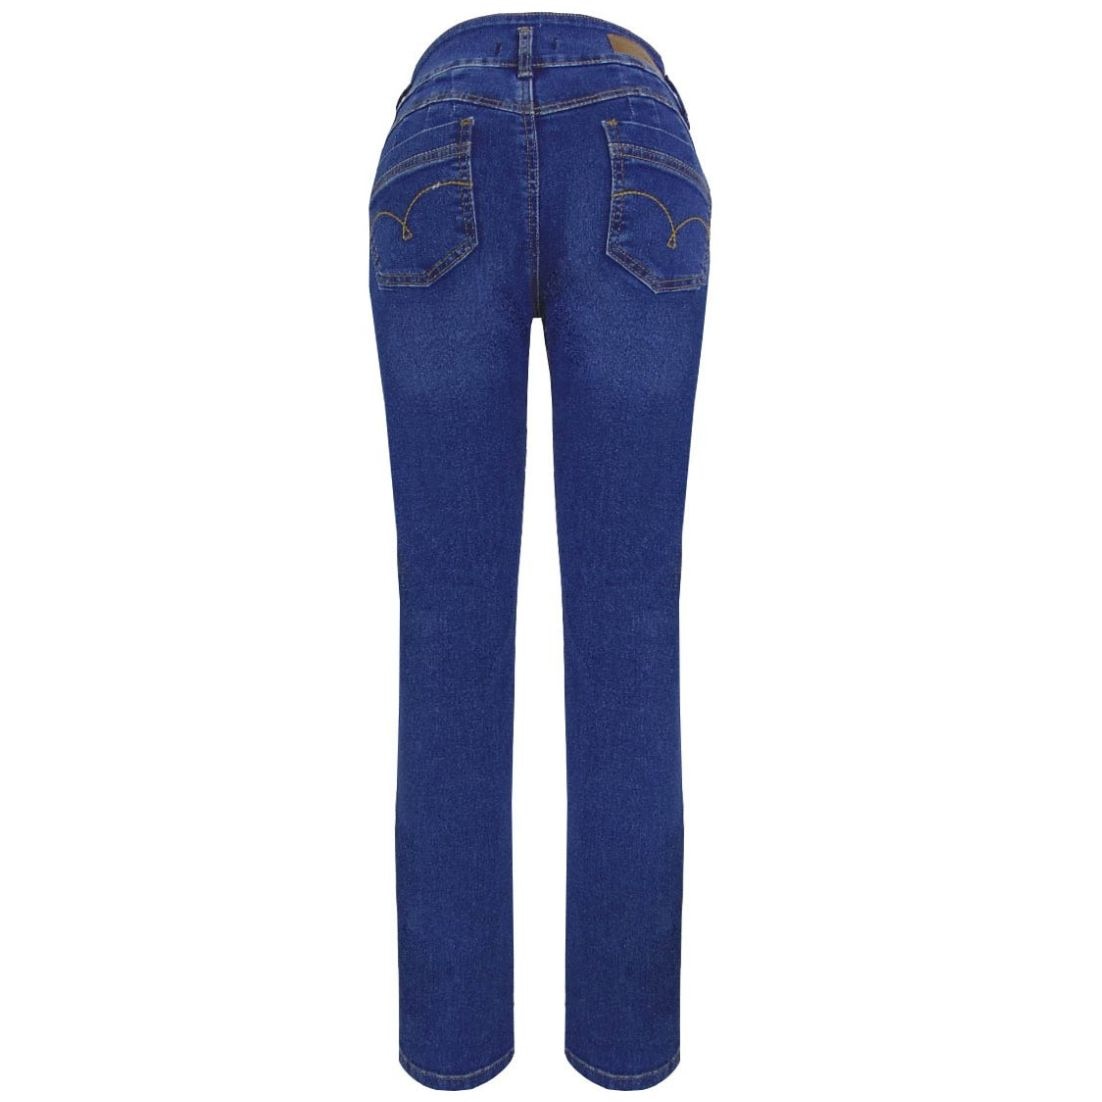 Jeans Para Mujer Pretina Ancha Azul Industrial